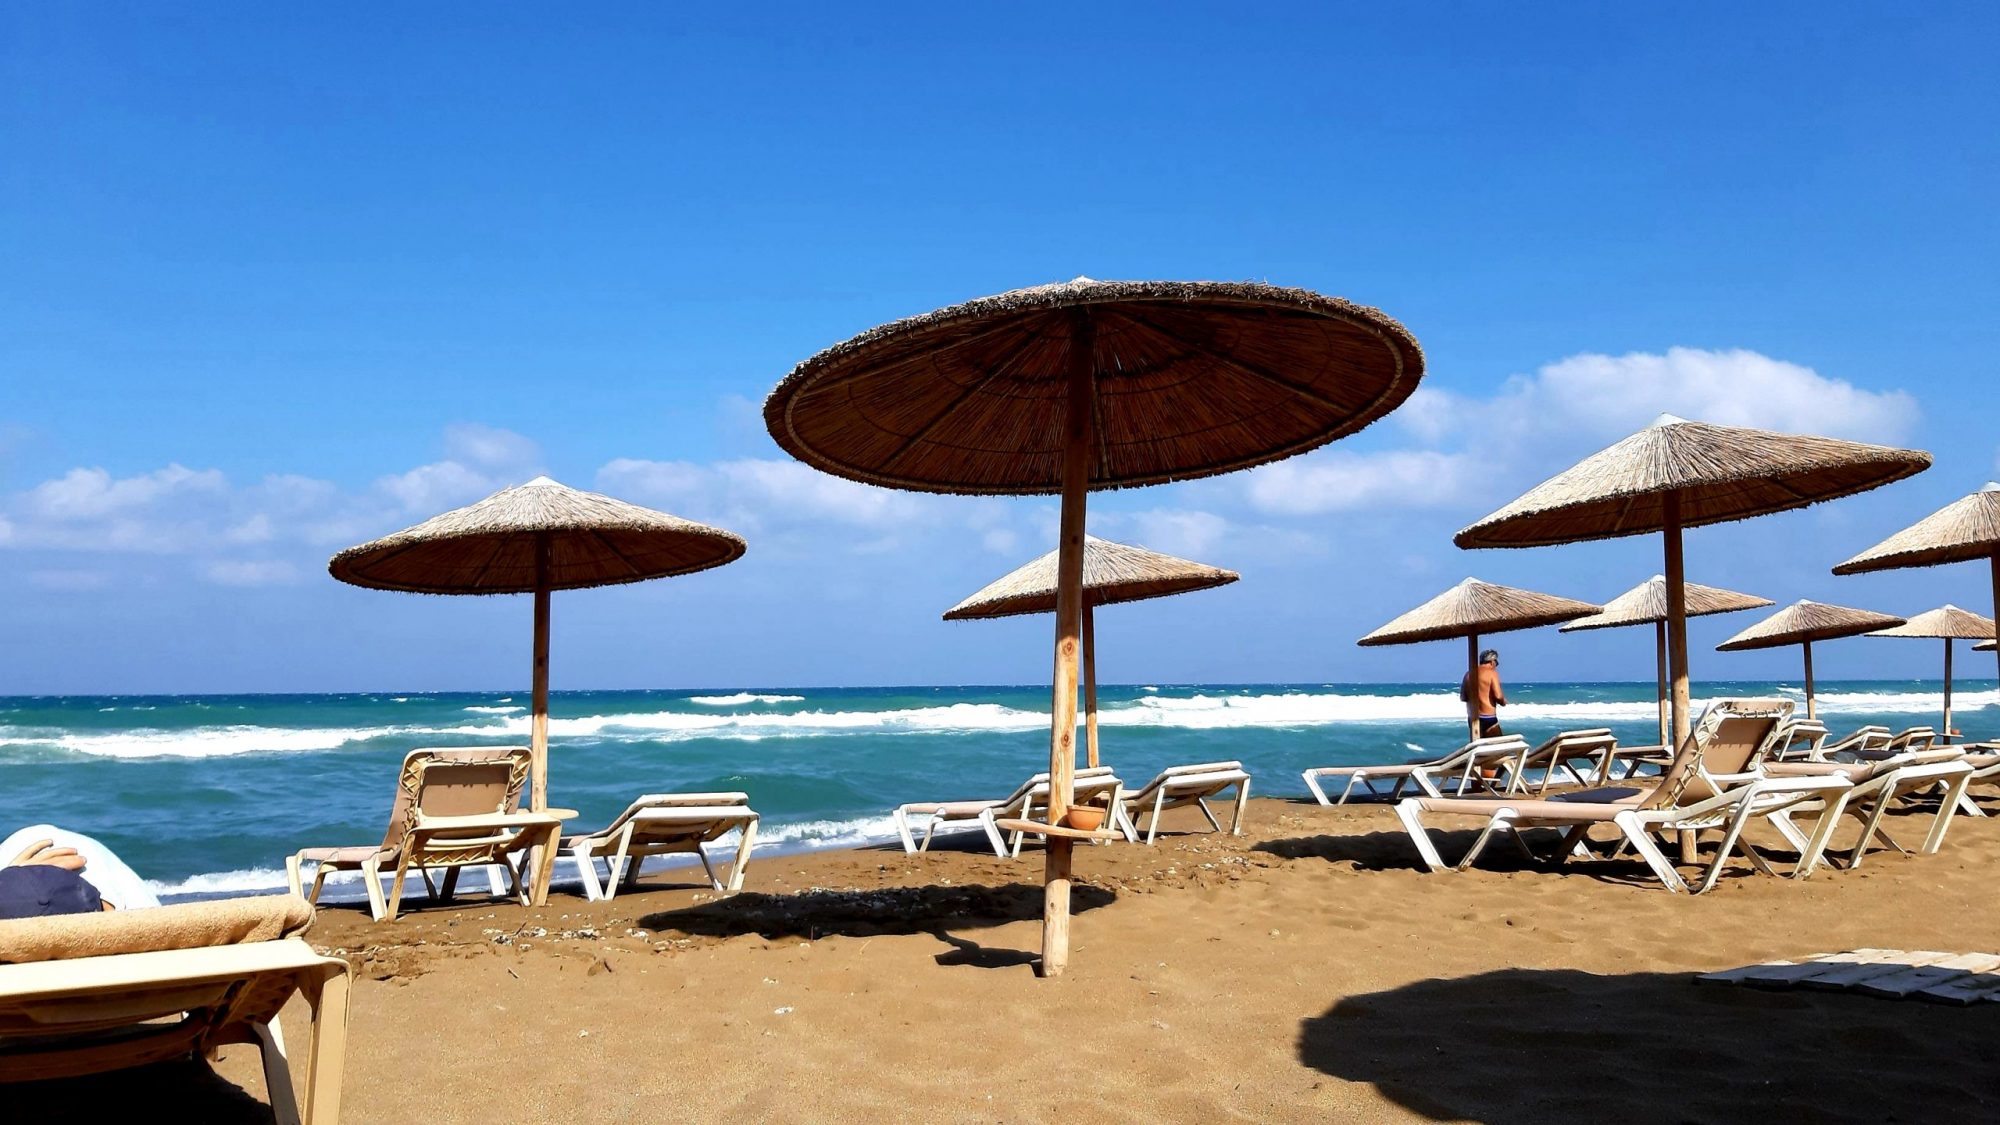 Tangourlaub Kreta Strand Sonne Meer